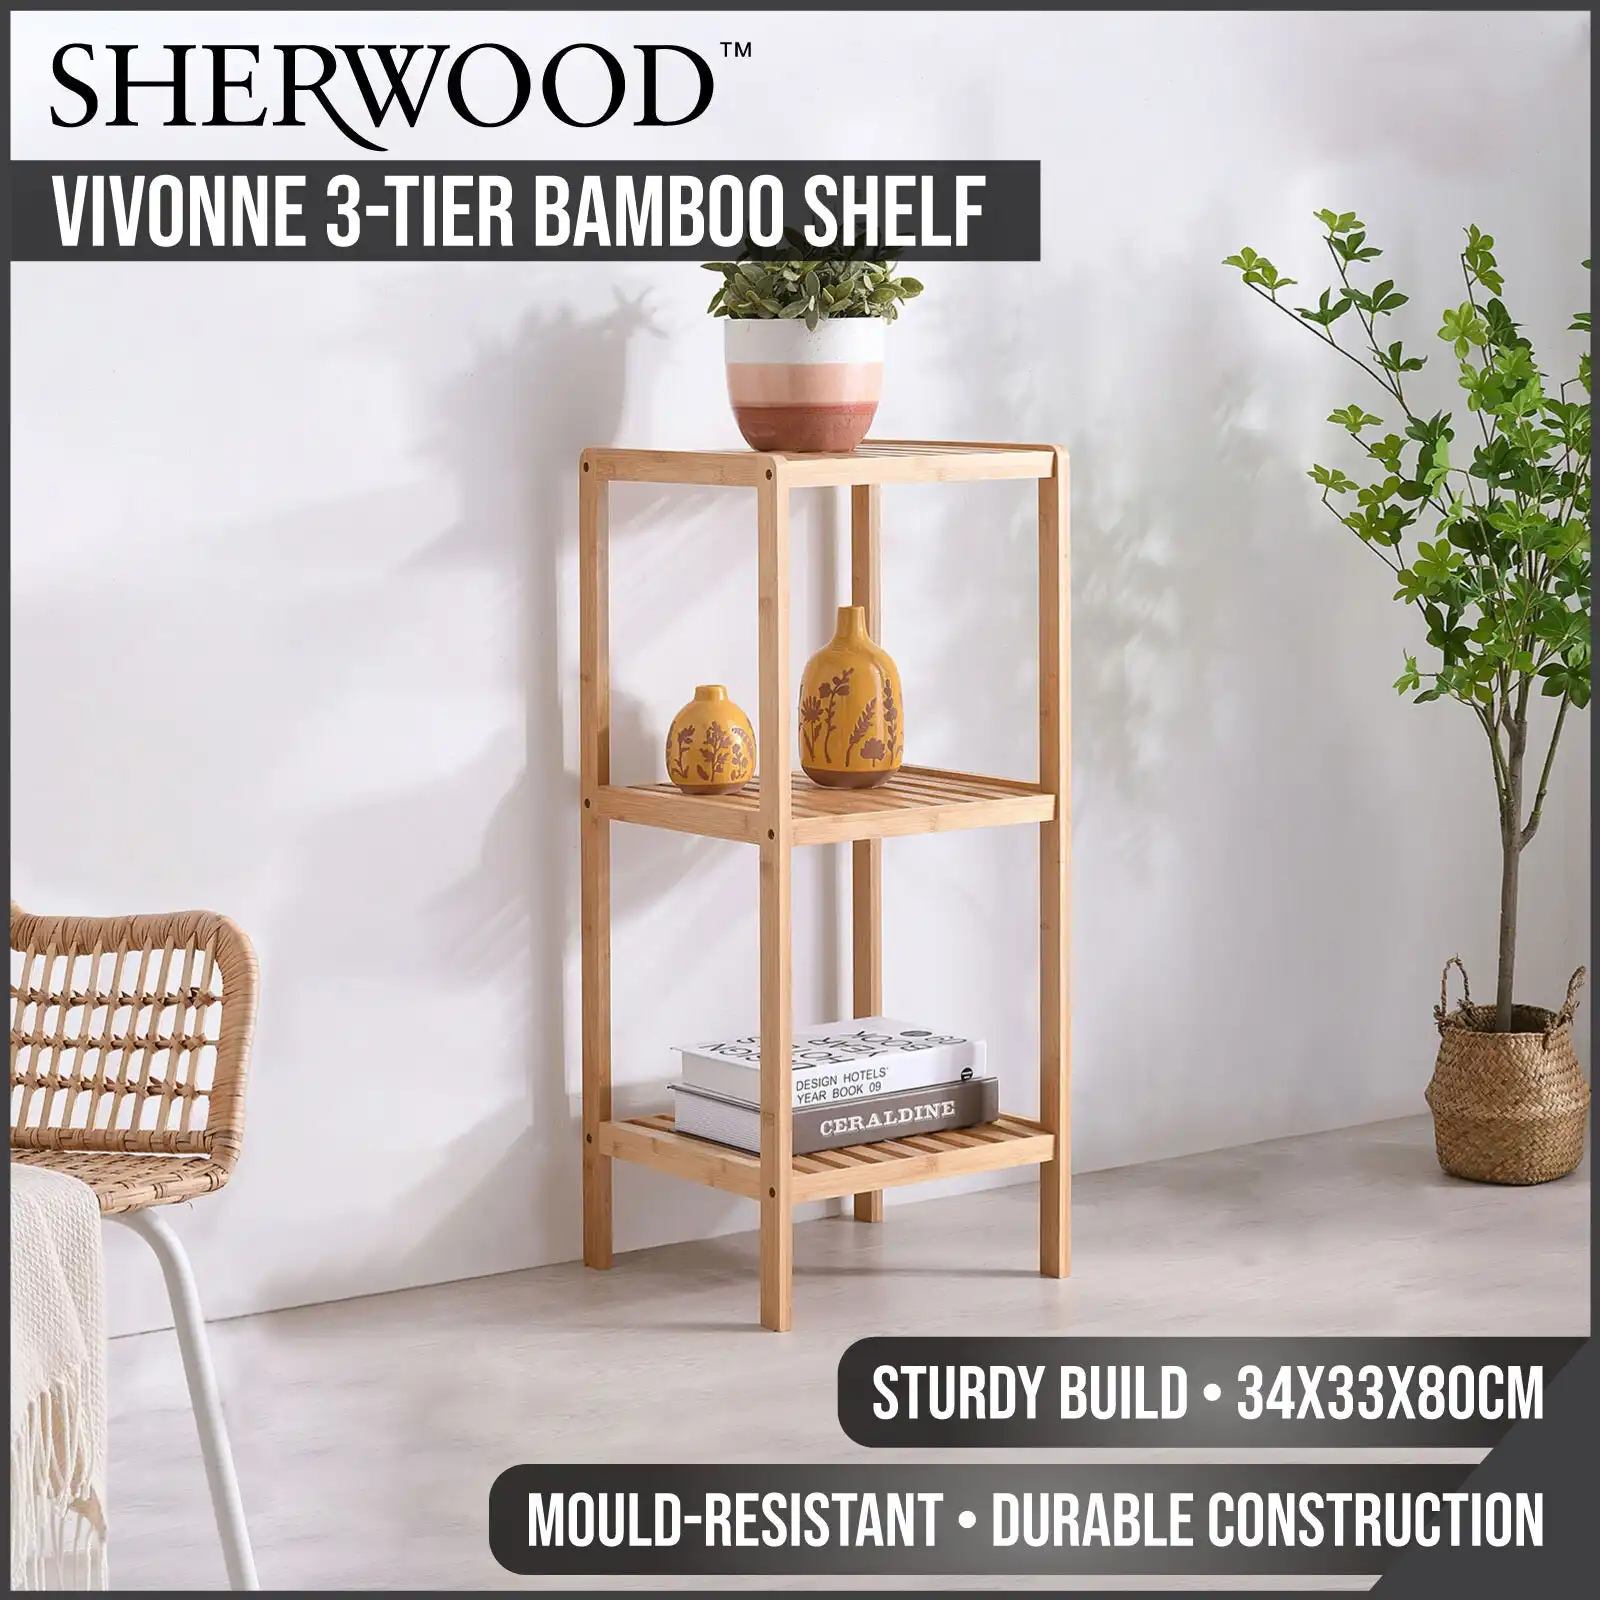 Sherwood Vivonne 3-Tier Bamboo Shelf, Natural Bamboo Colour, 34x33x80cm